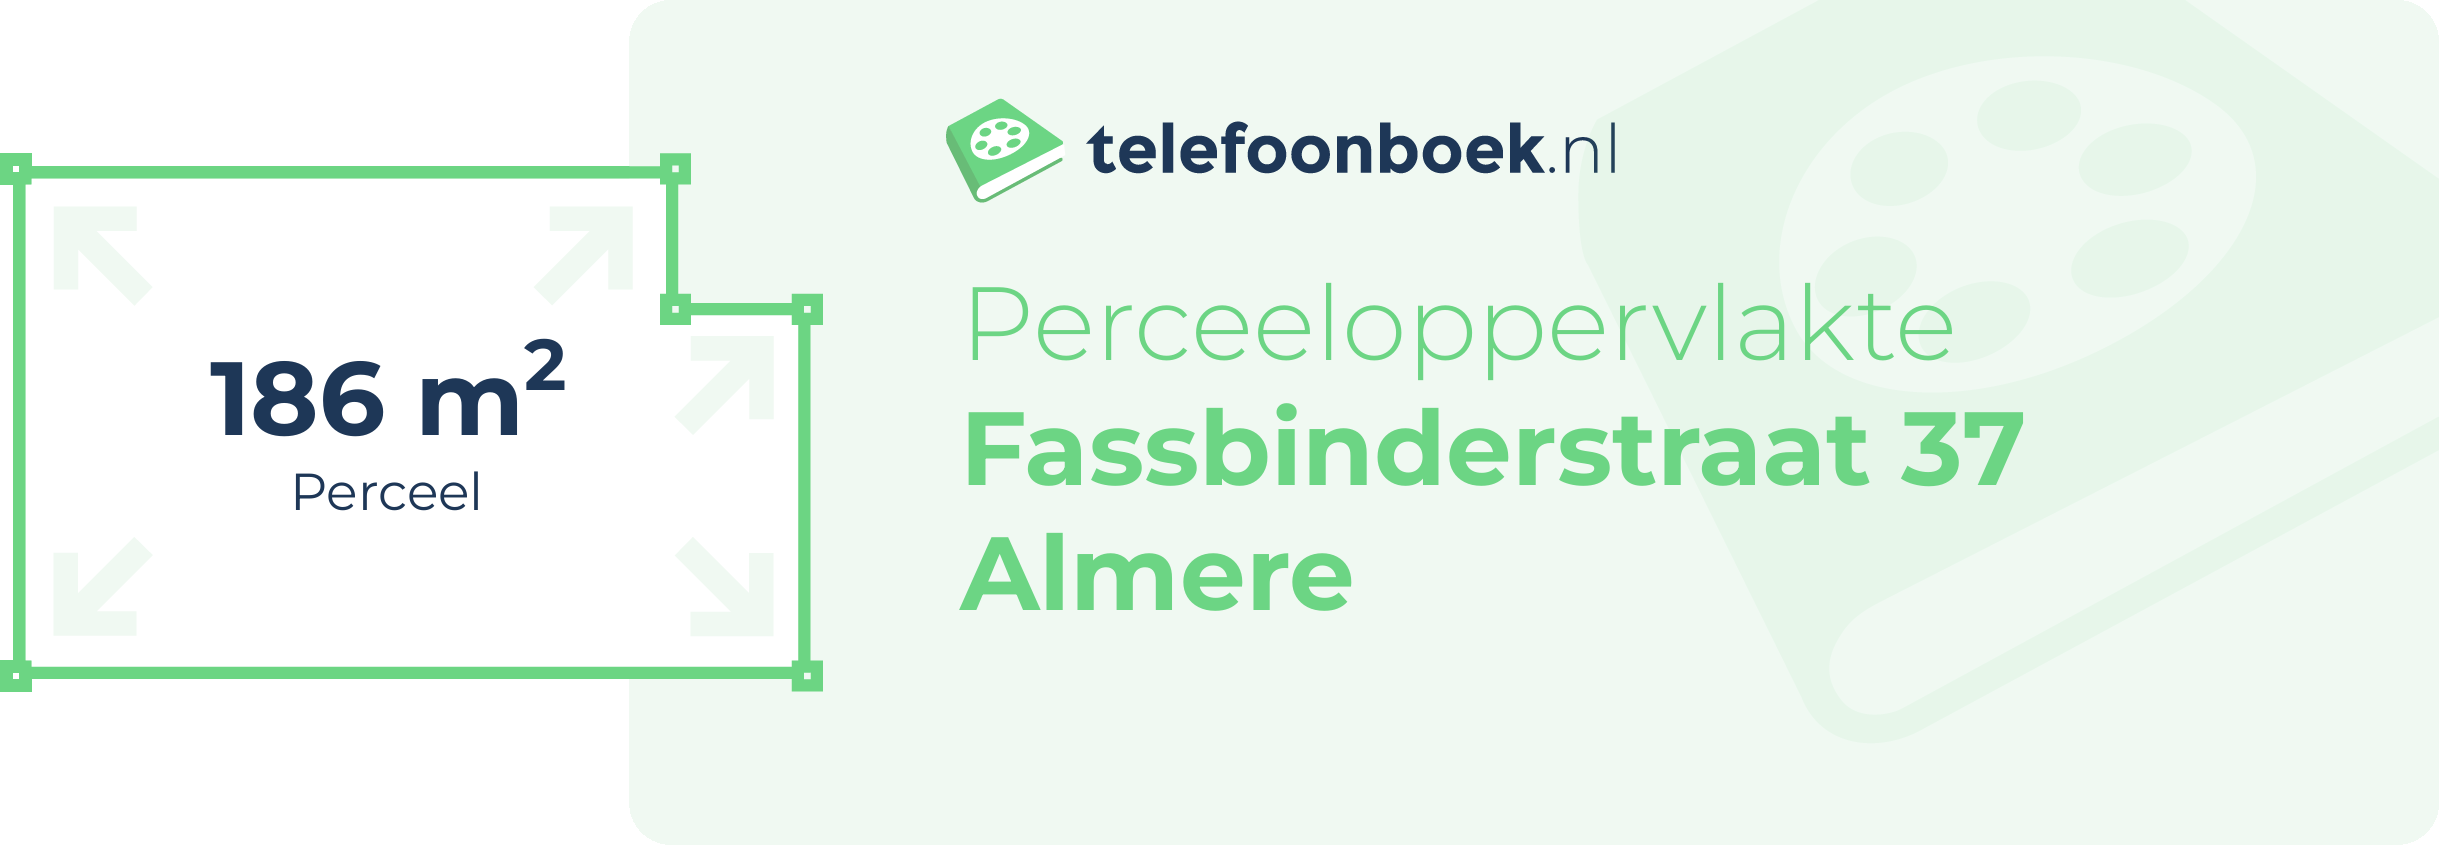 Perceeloppervlakte Fassbinderstraat 37 Almere